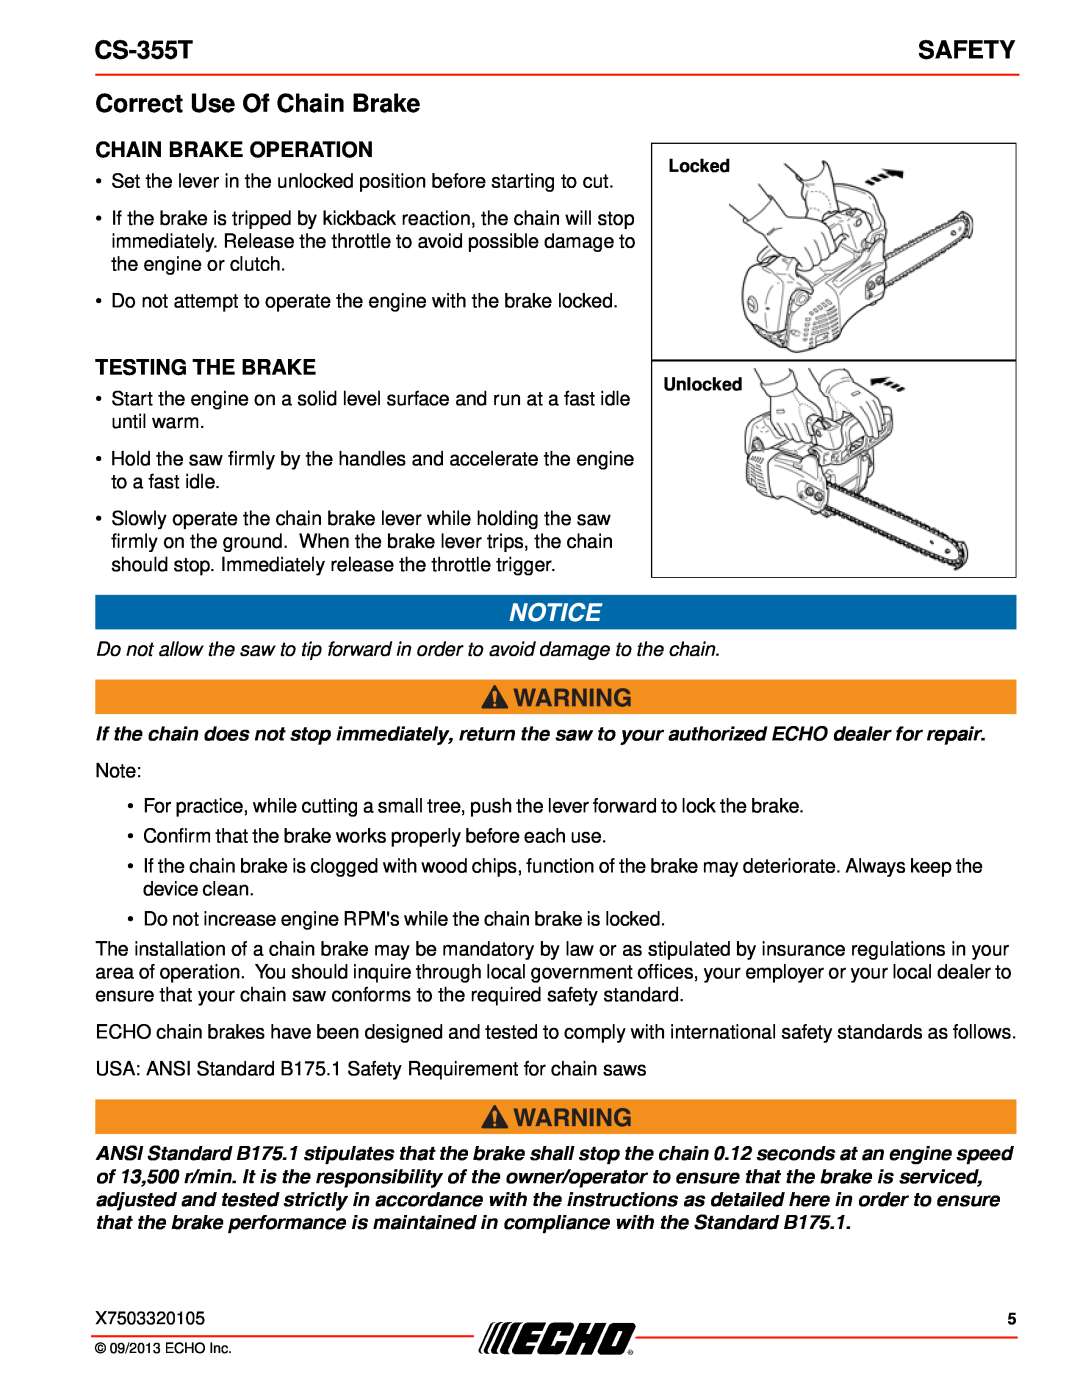 Echo CS-355T instruction manual Correct Use Of Chain Brake, Safety, Chain Brake Operation, Testing The Brake 